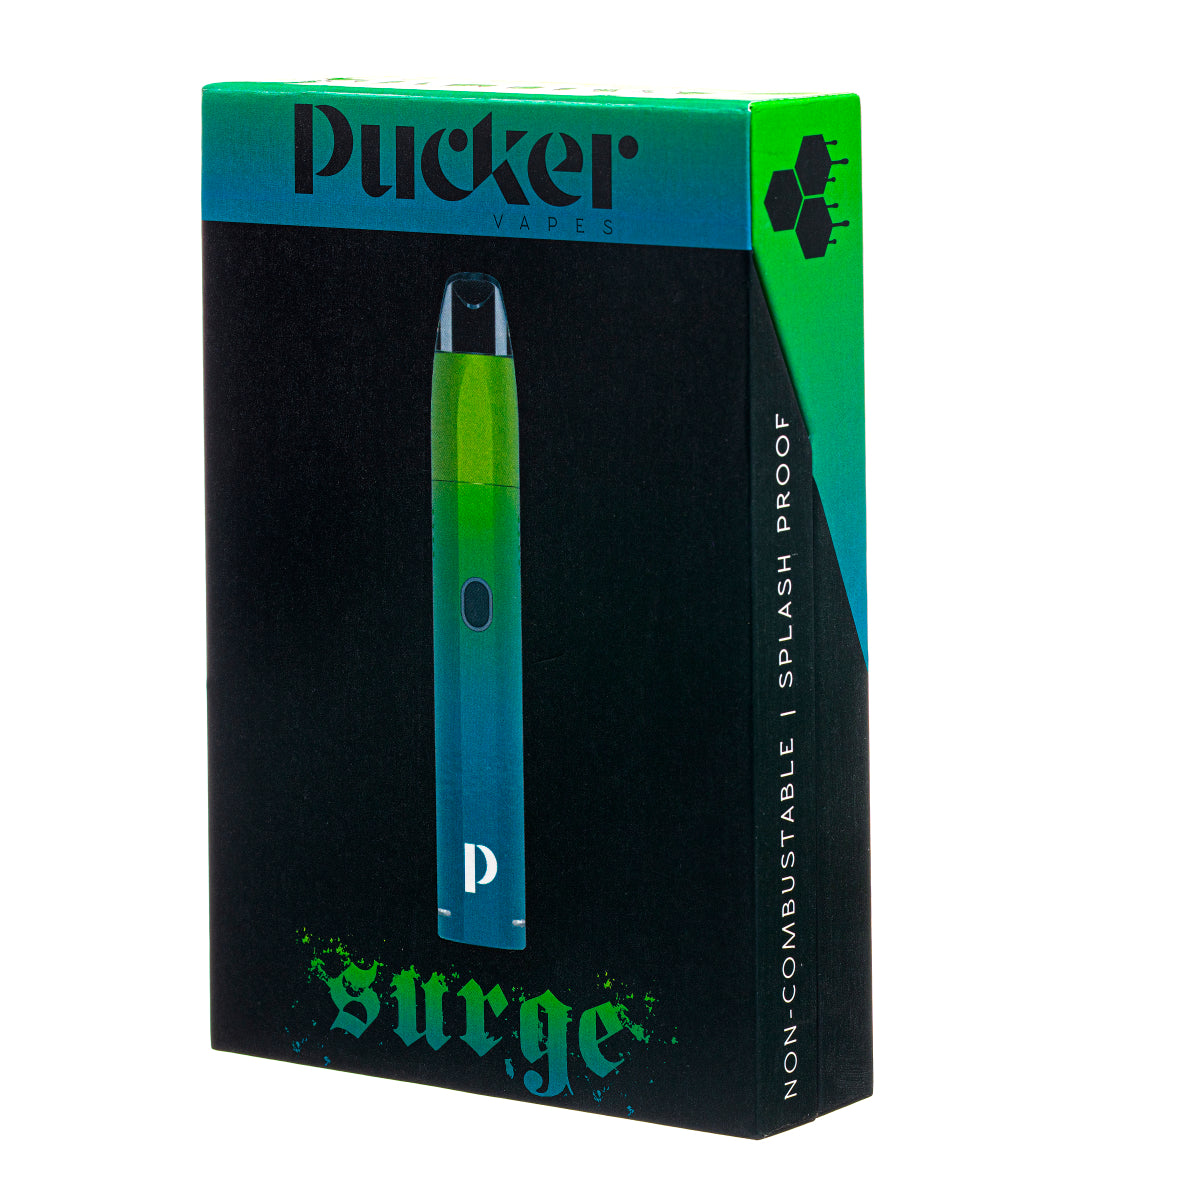 PUCKER "Surge" Smoking Wax Vaporizer